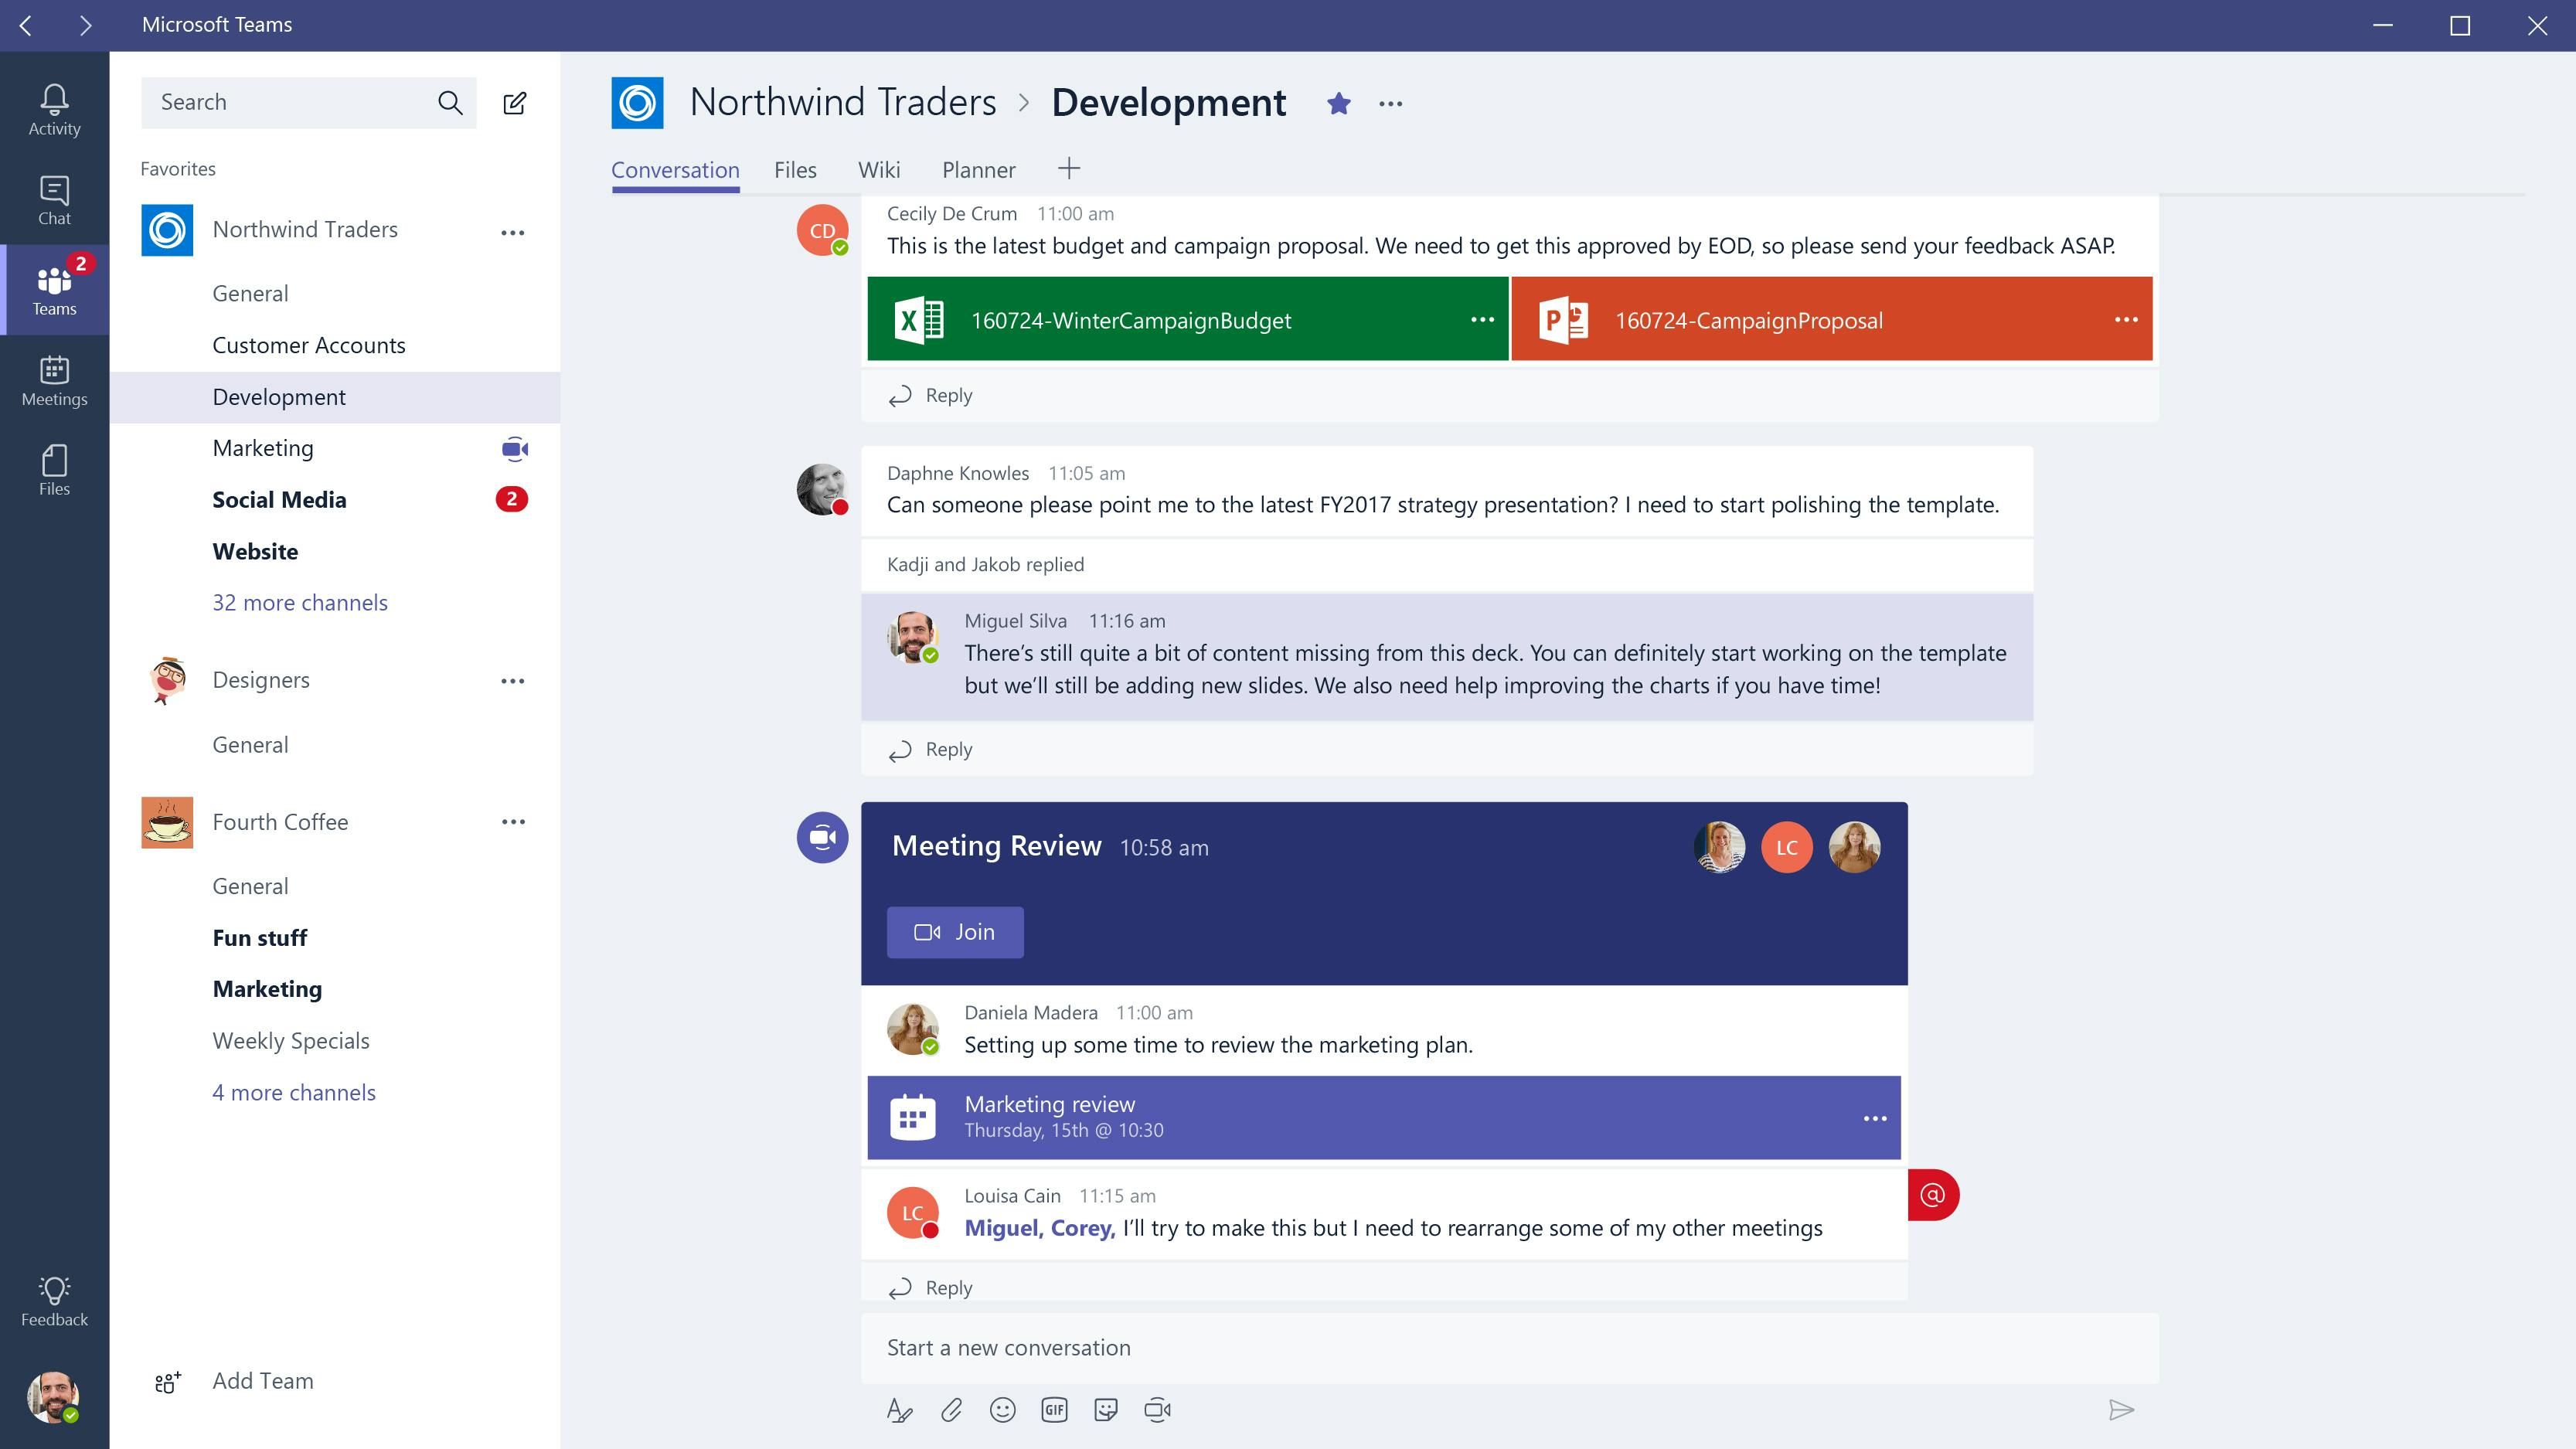 Screenshot of Microsoft Teams showing chat interface